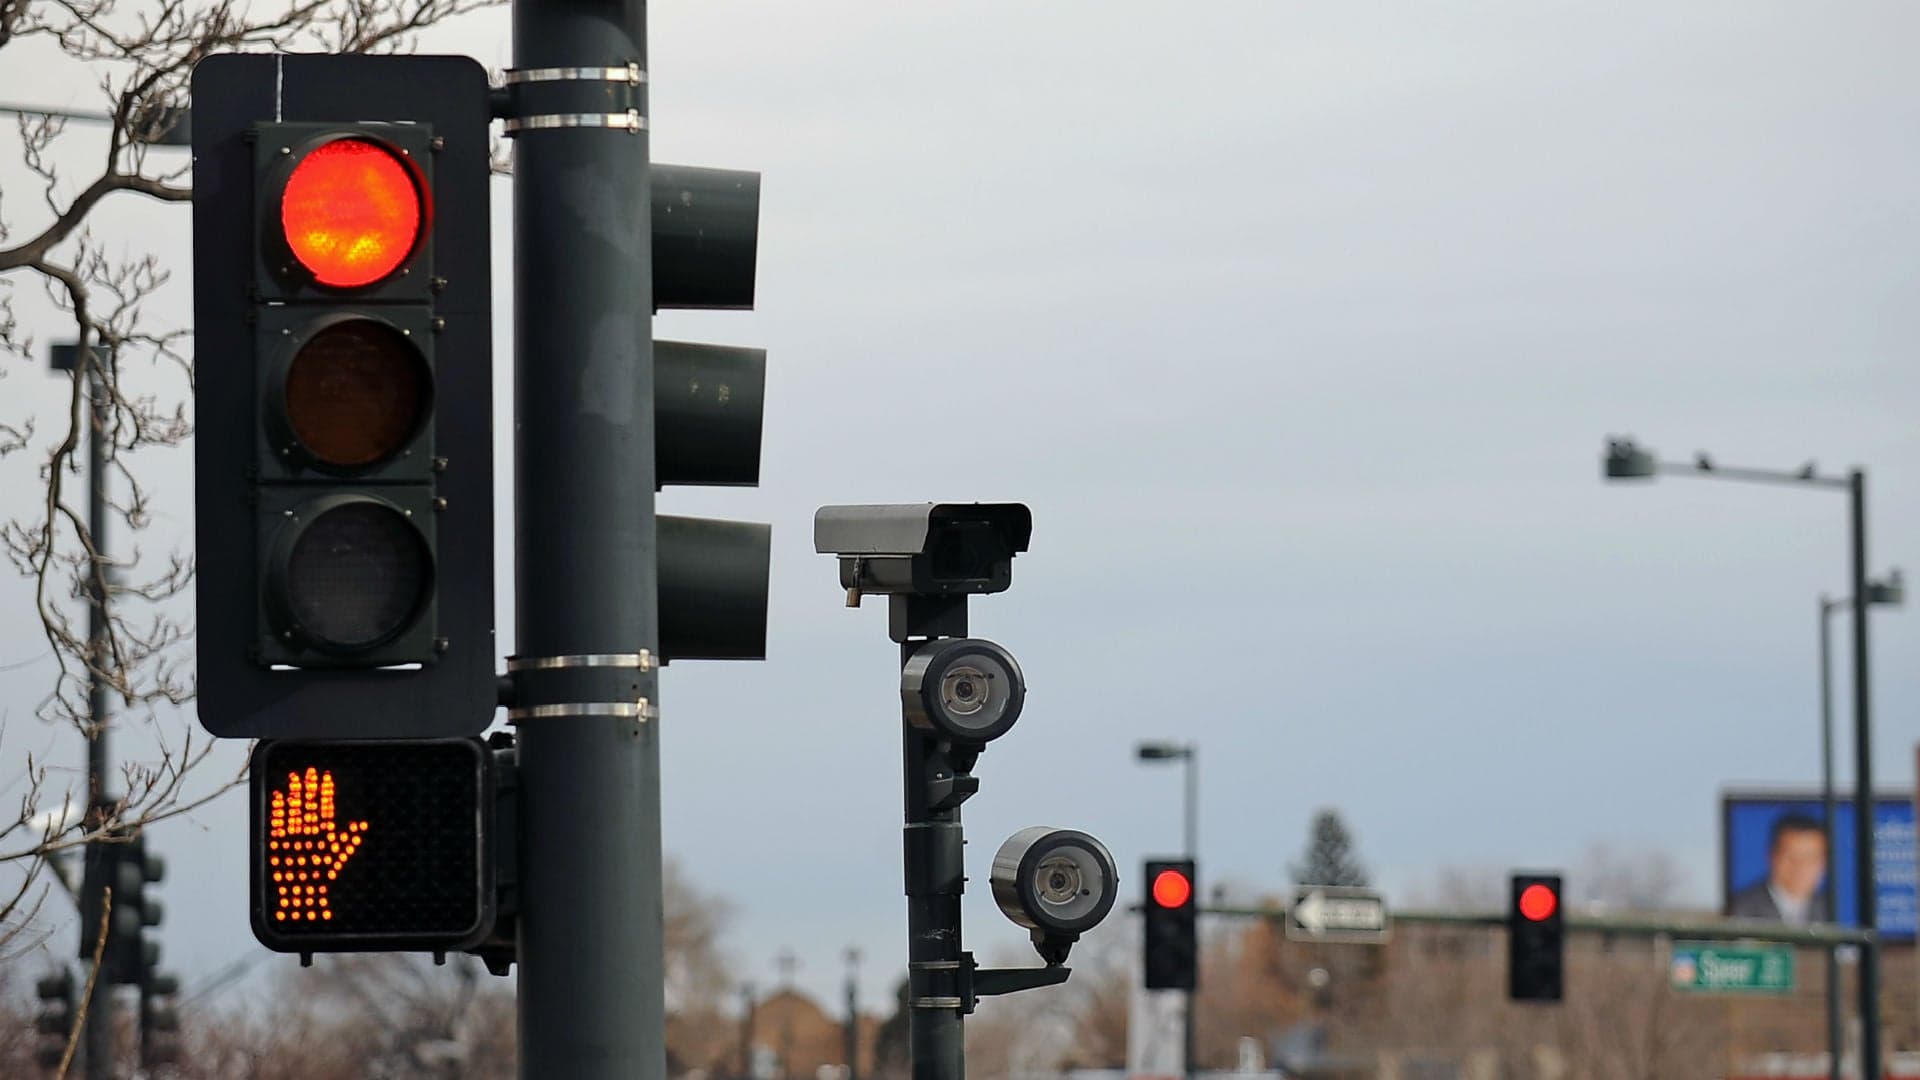 Texas Bill Aims to Ban Red Light Cameras Despite Generating $5.8M Revenue